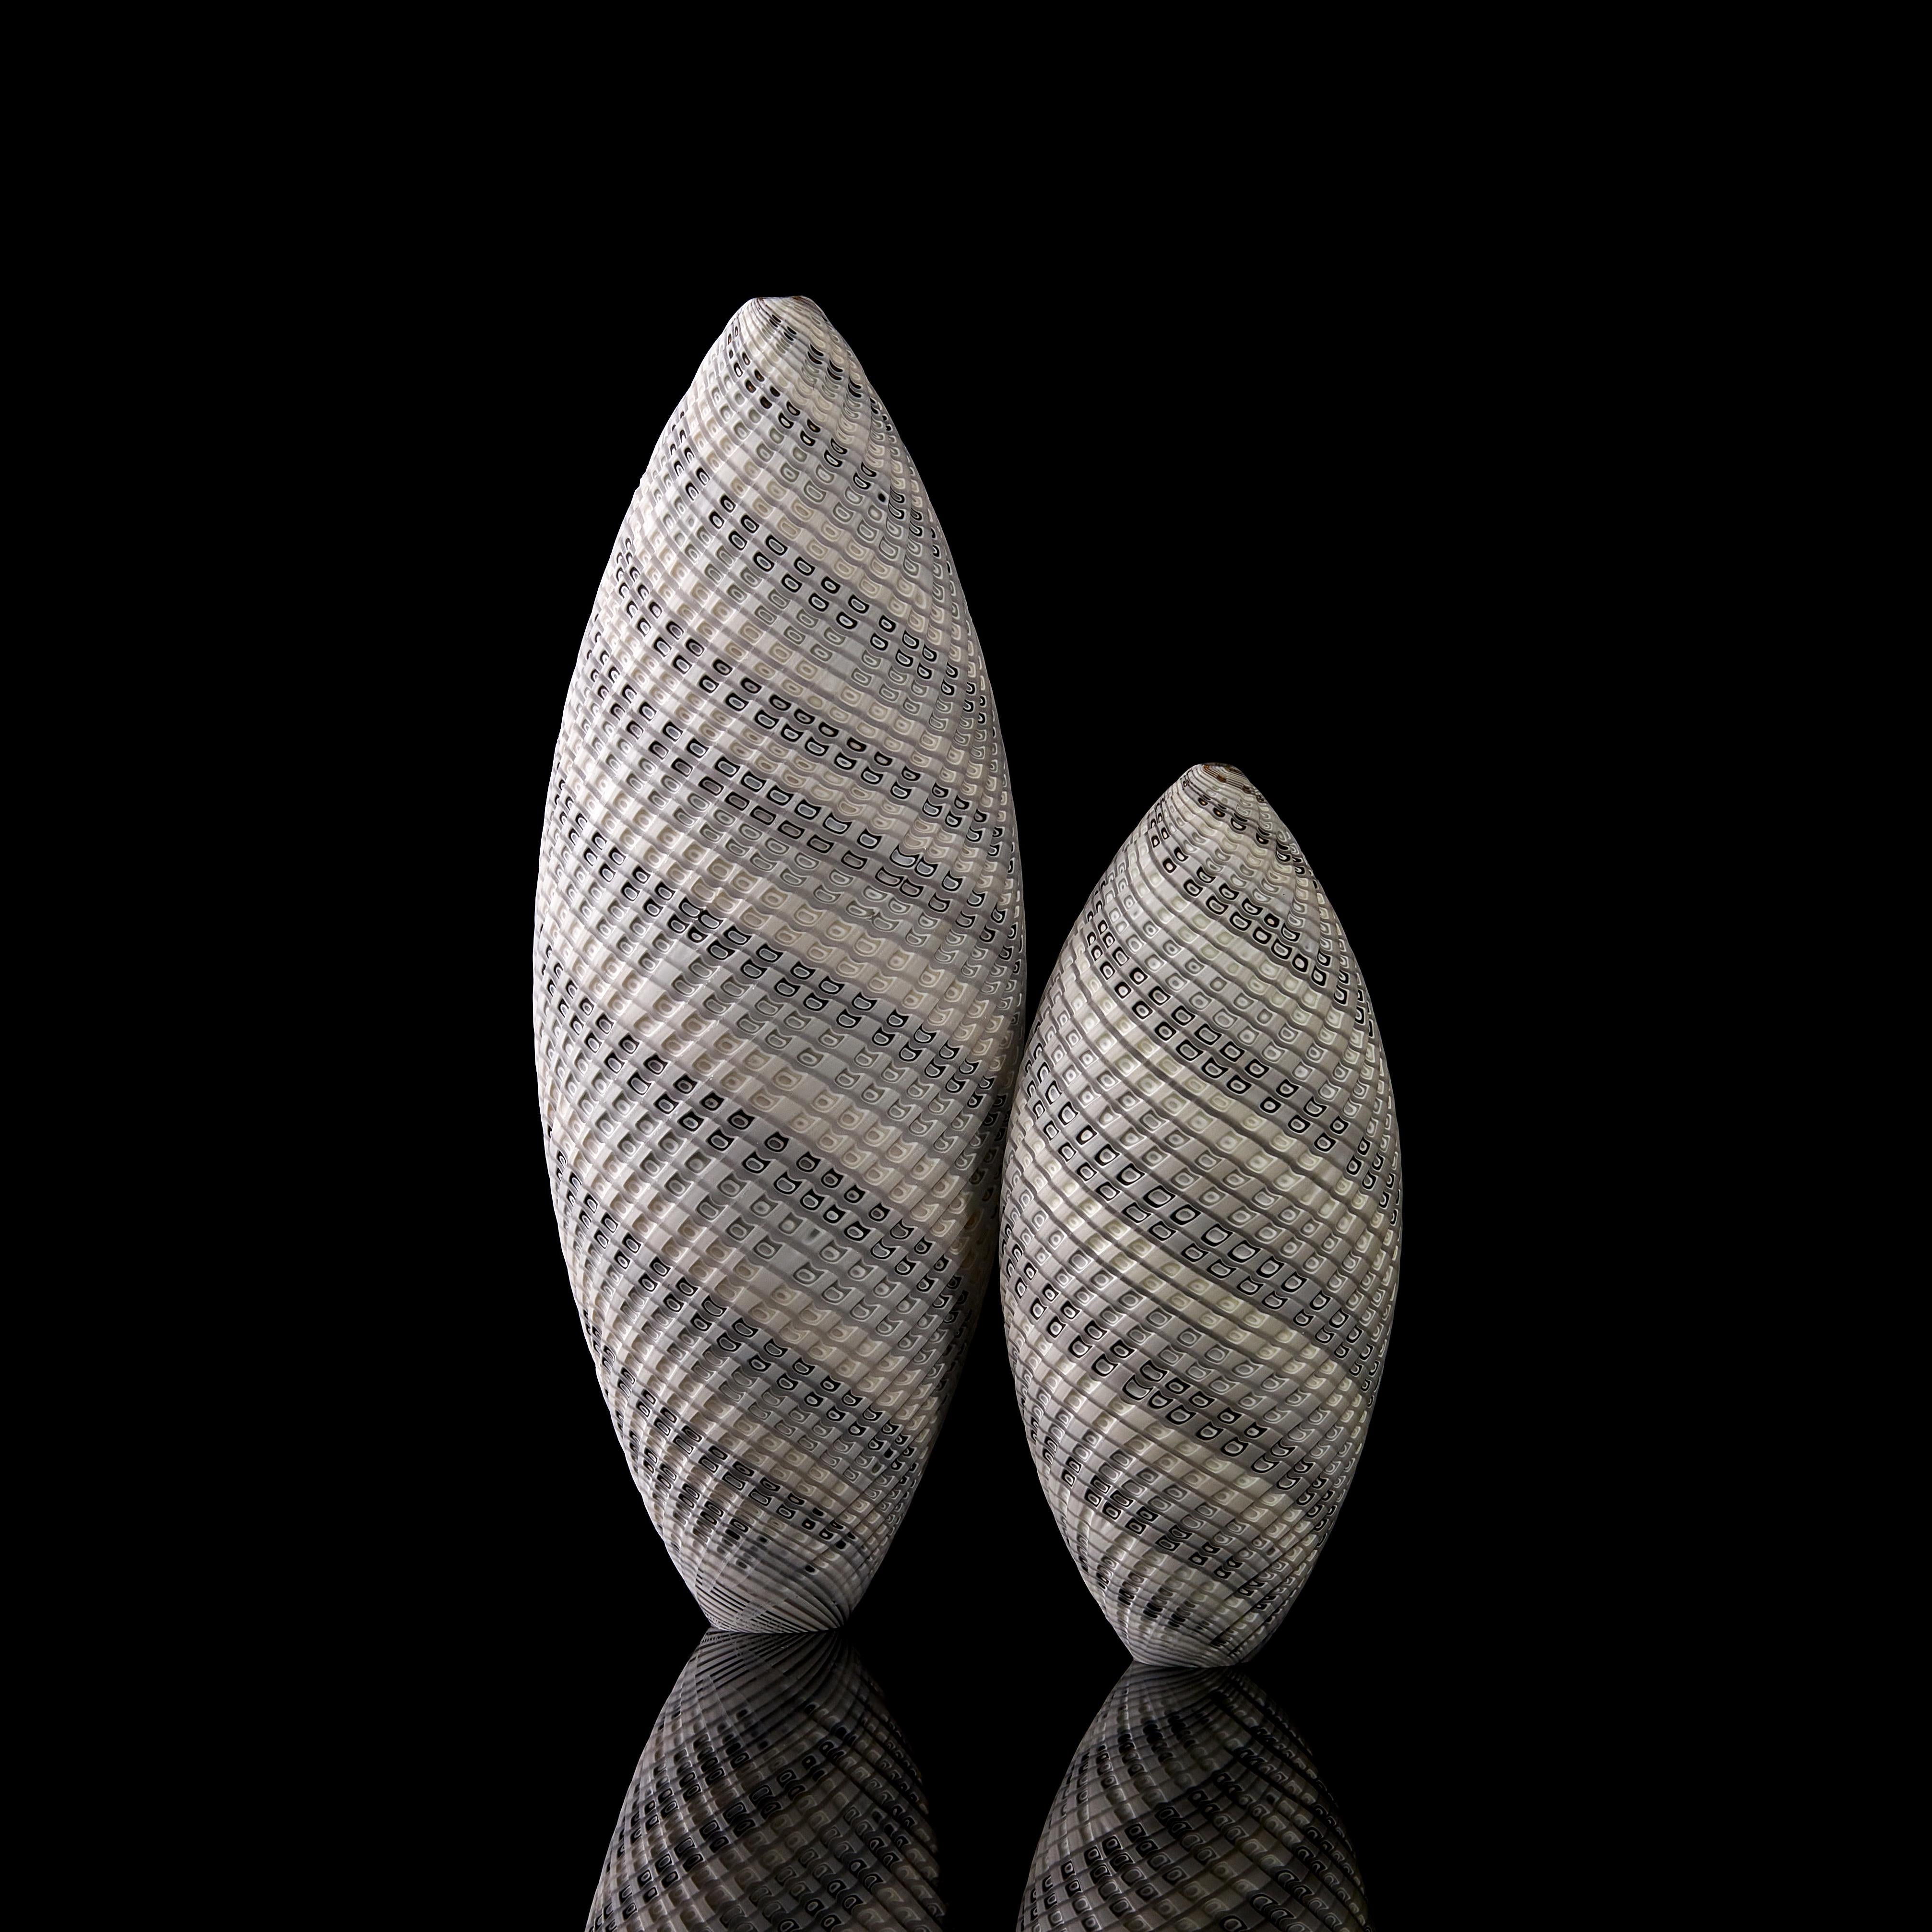 Organic Modern Woven Two-Tone White Pair, an Organic Textured Art Glass Duo by Layne Row